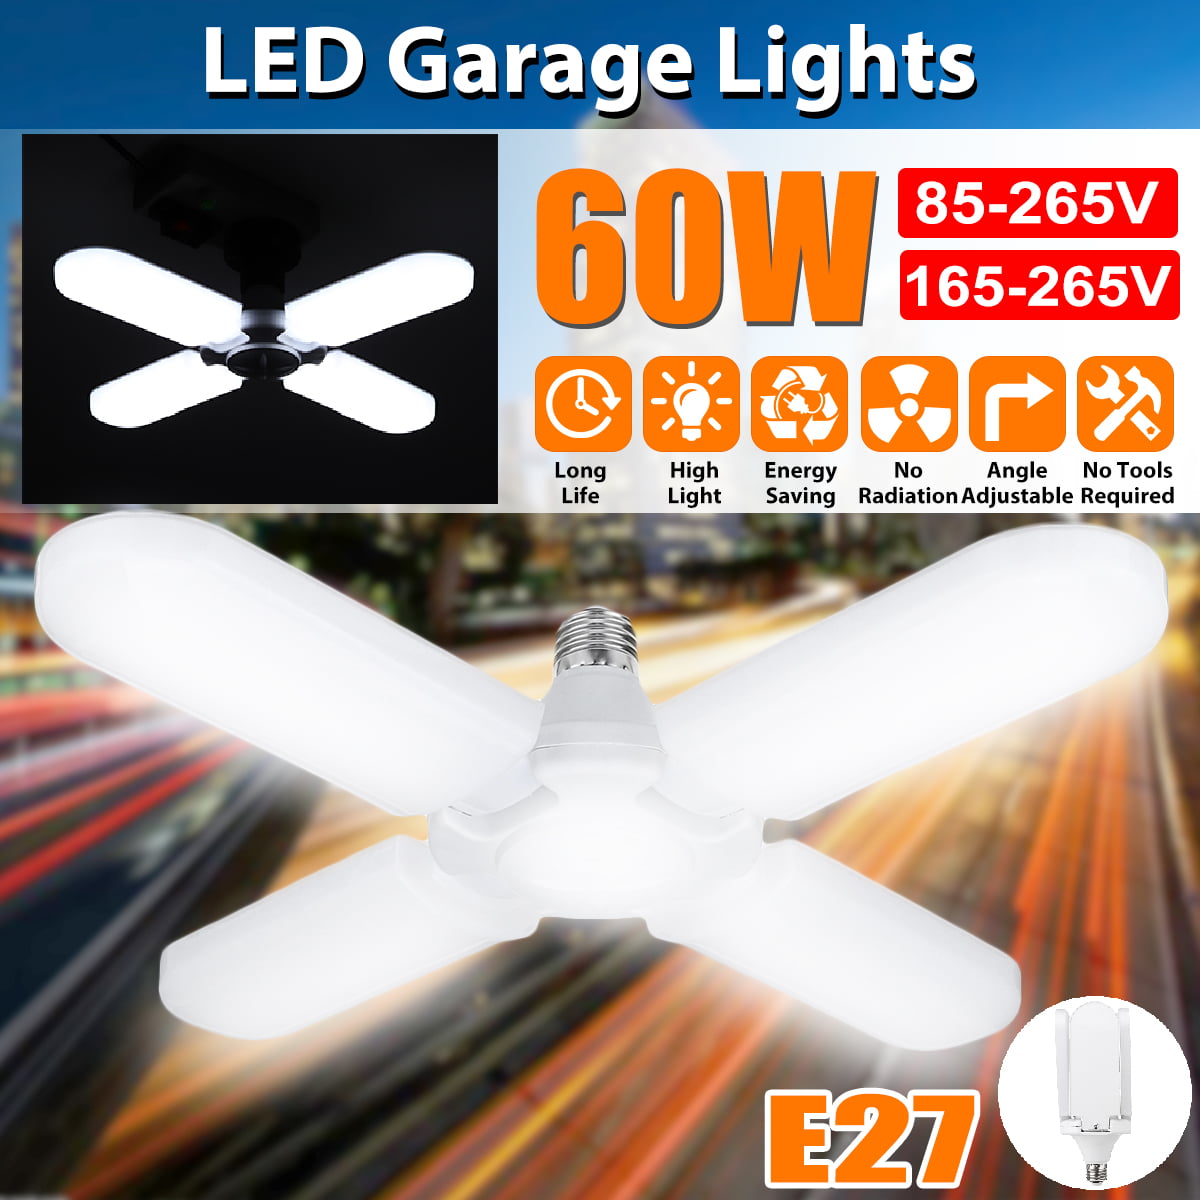 60W E27 LED Ceiling Fan Lamp Shop Work Light Indoor Folding Garage Lamp 85-265V 